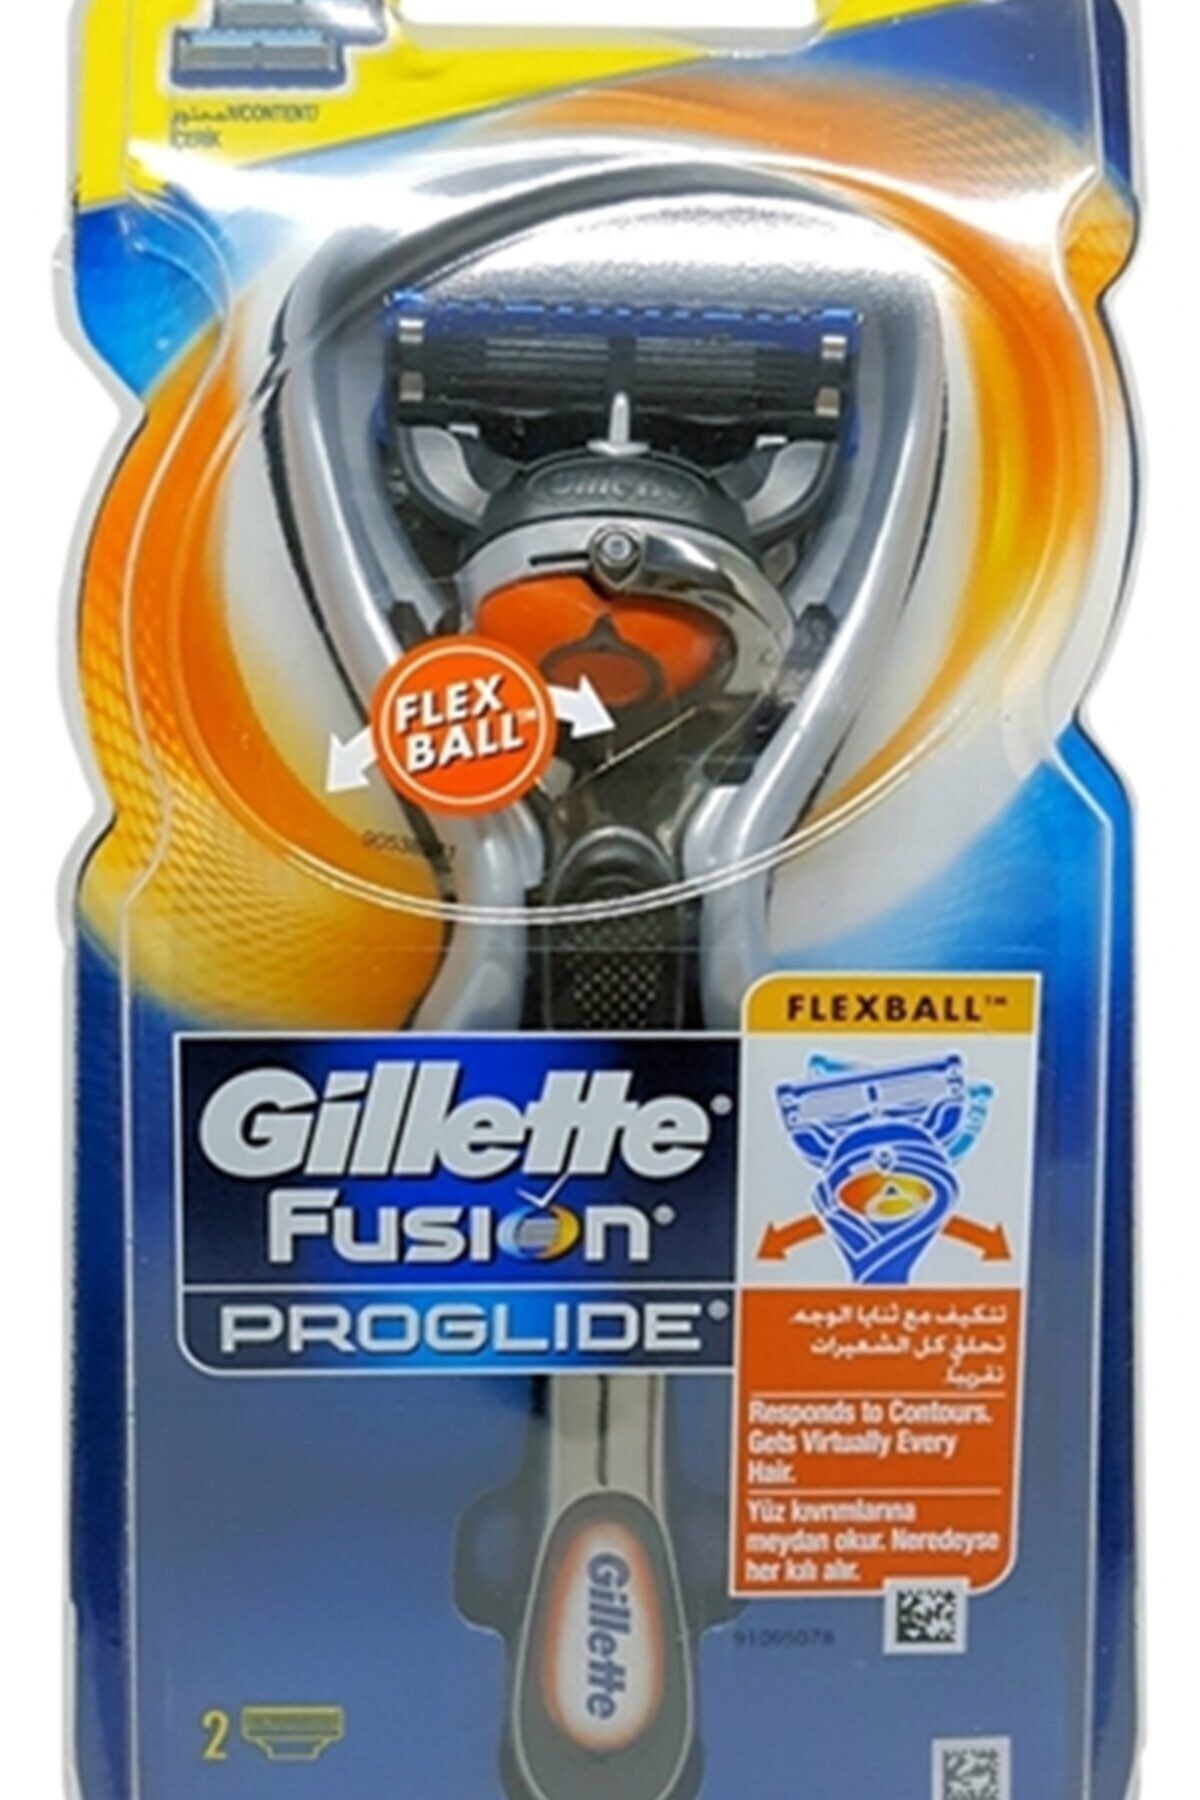 Gillette Fusion Proglide Flexball 2up Tıraş Makinesi